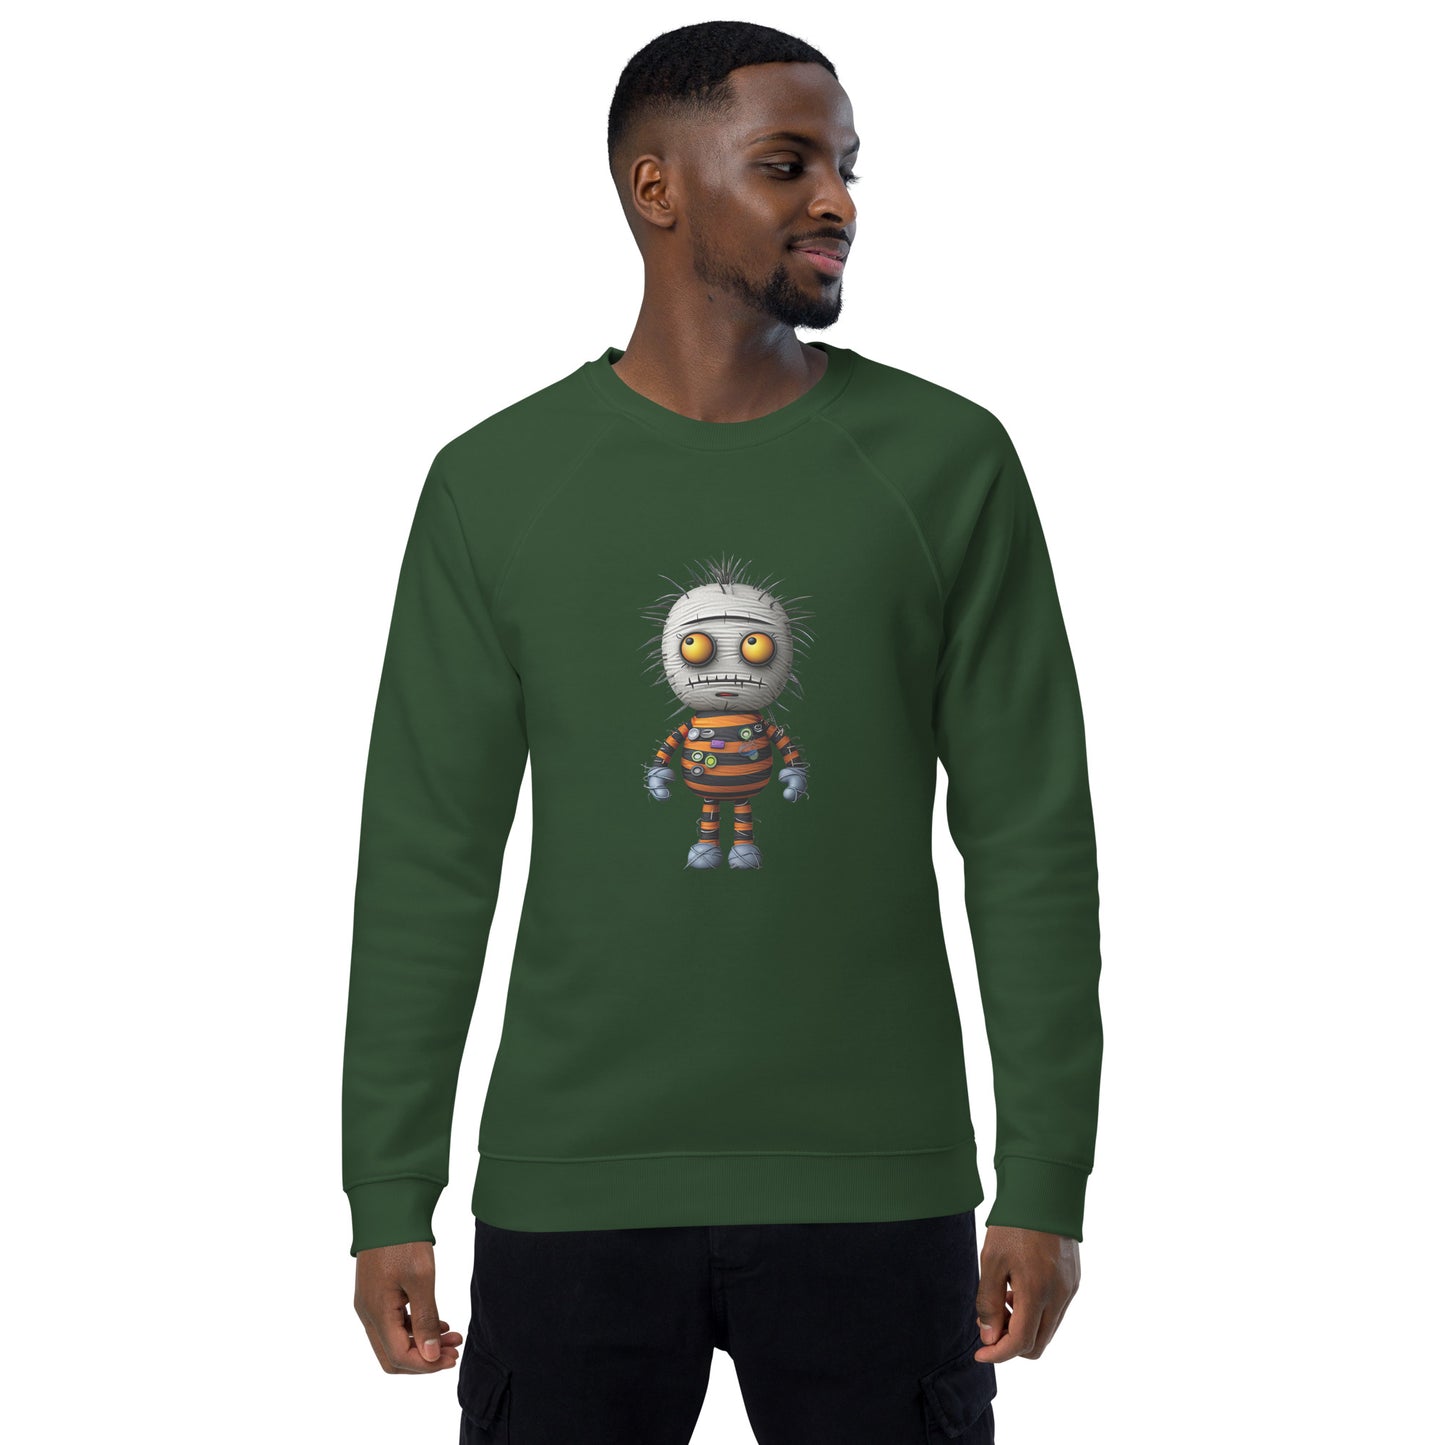 Unisex Organic Sweatshirt/Funny-Creepy-Doll